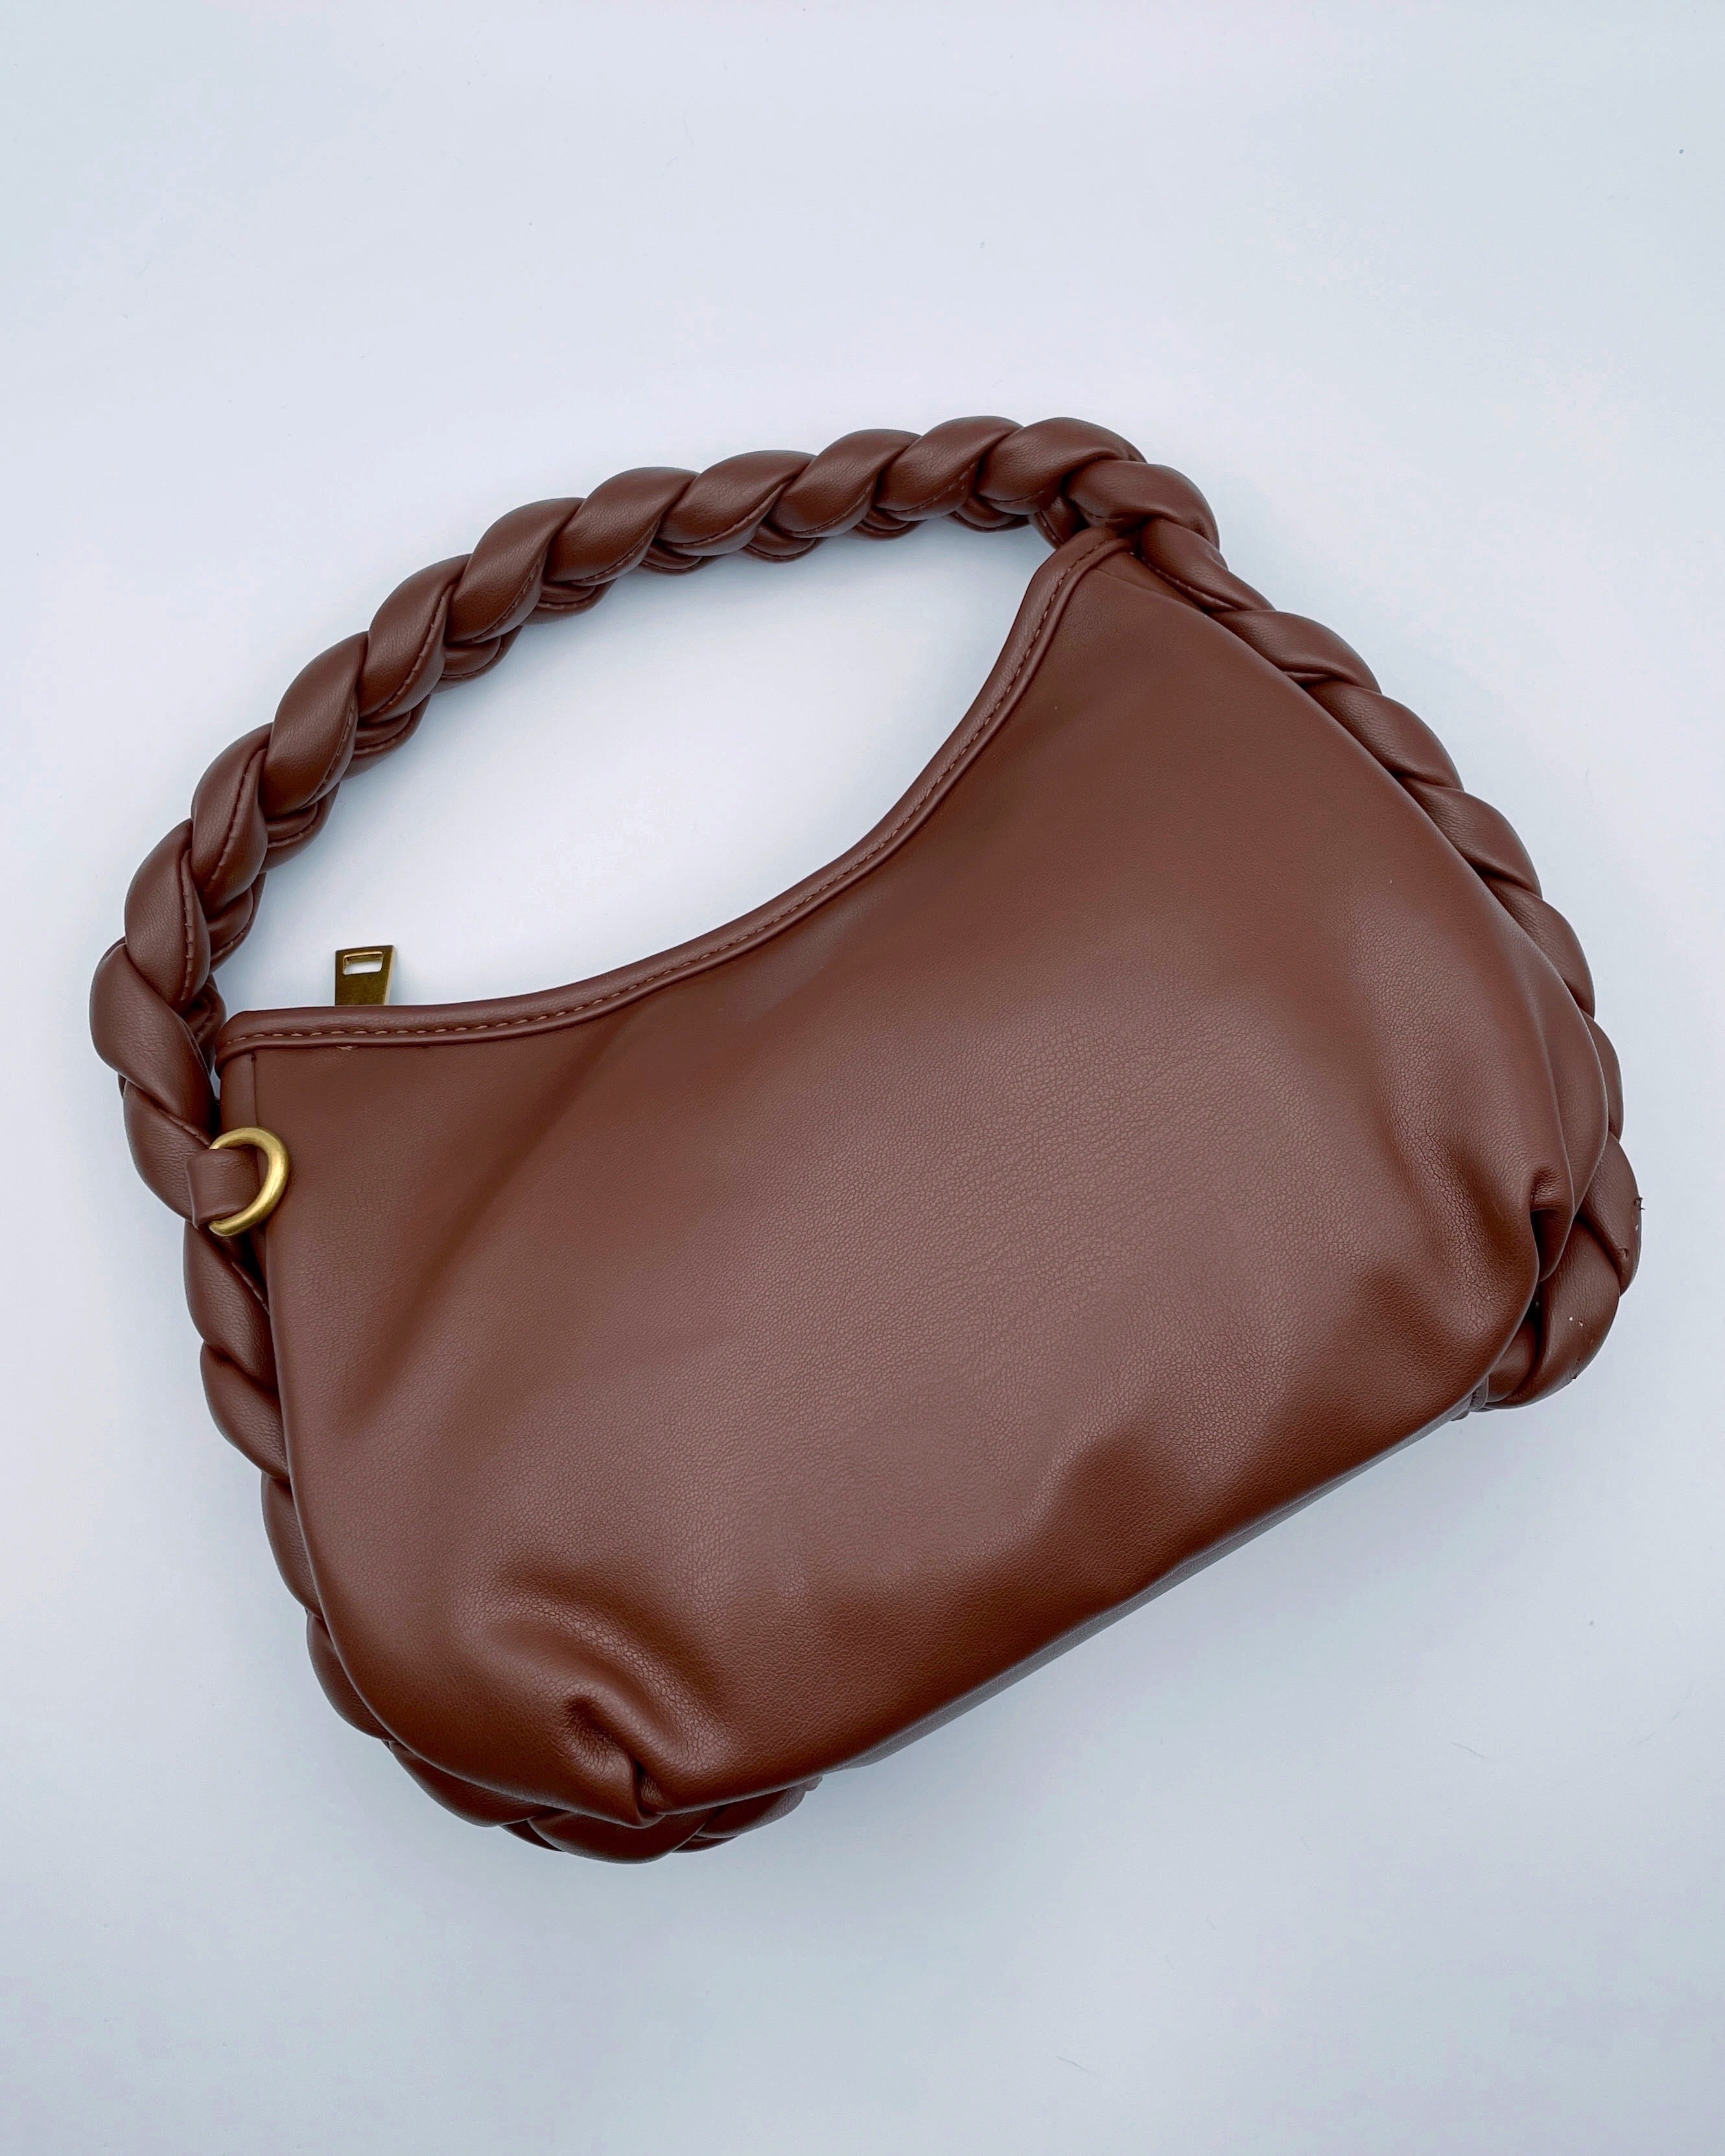 MELIE BIANCO Eliana Handbag in Chocolate - Blackbird Boutique